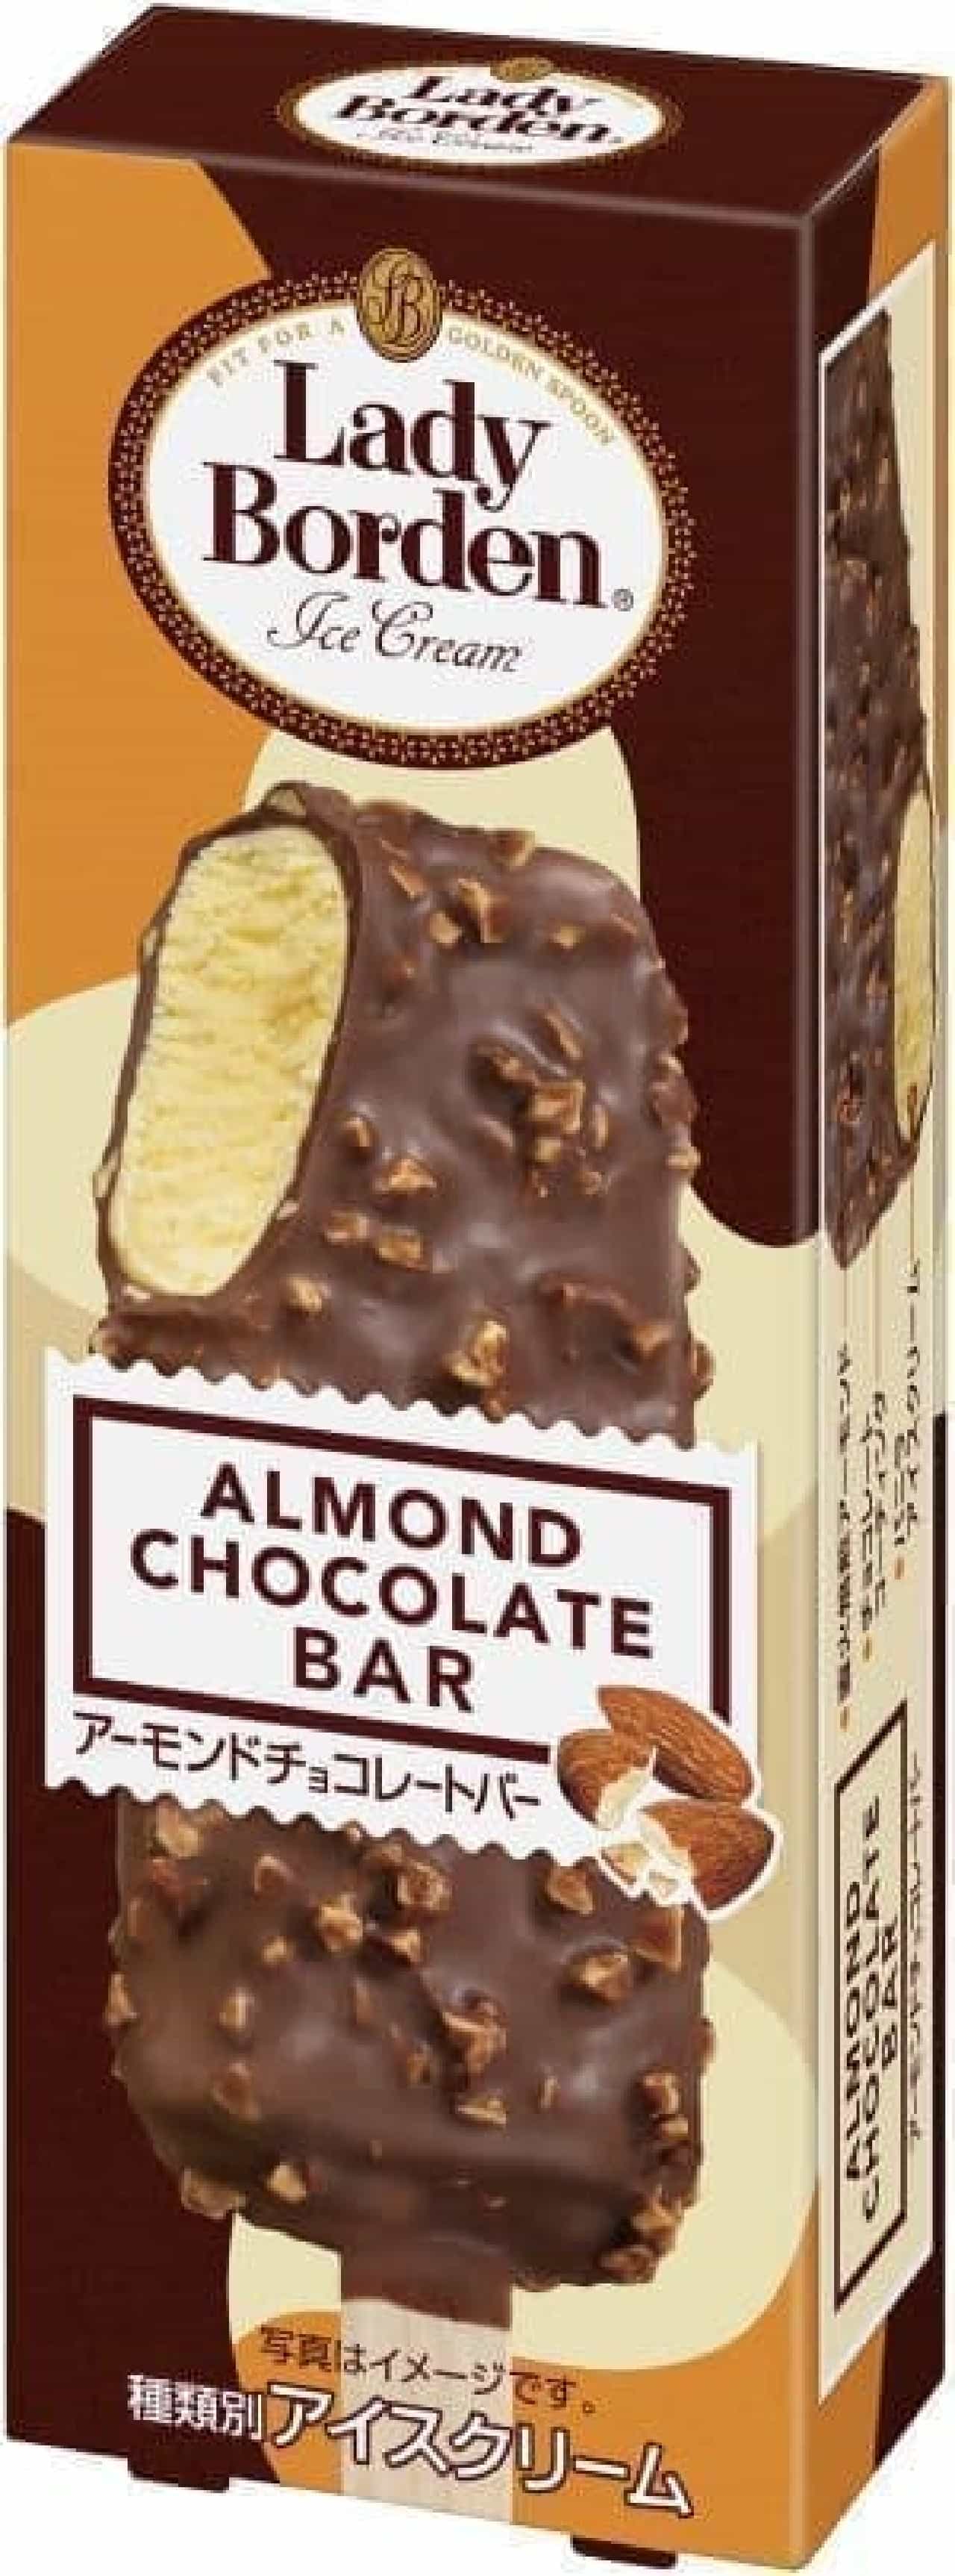 Lady Borden Almond Chocolate Bar